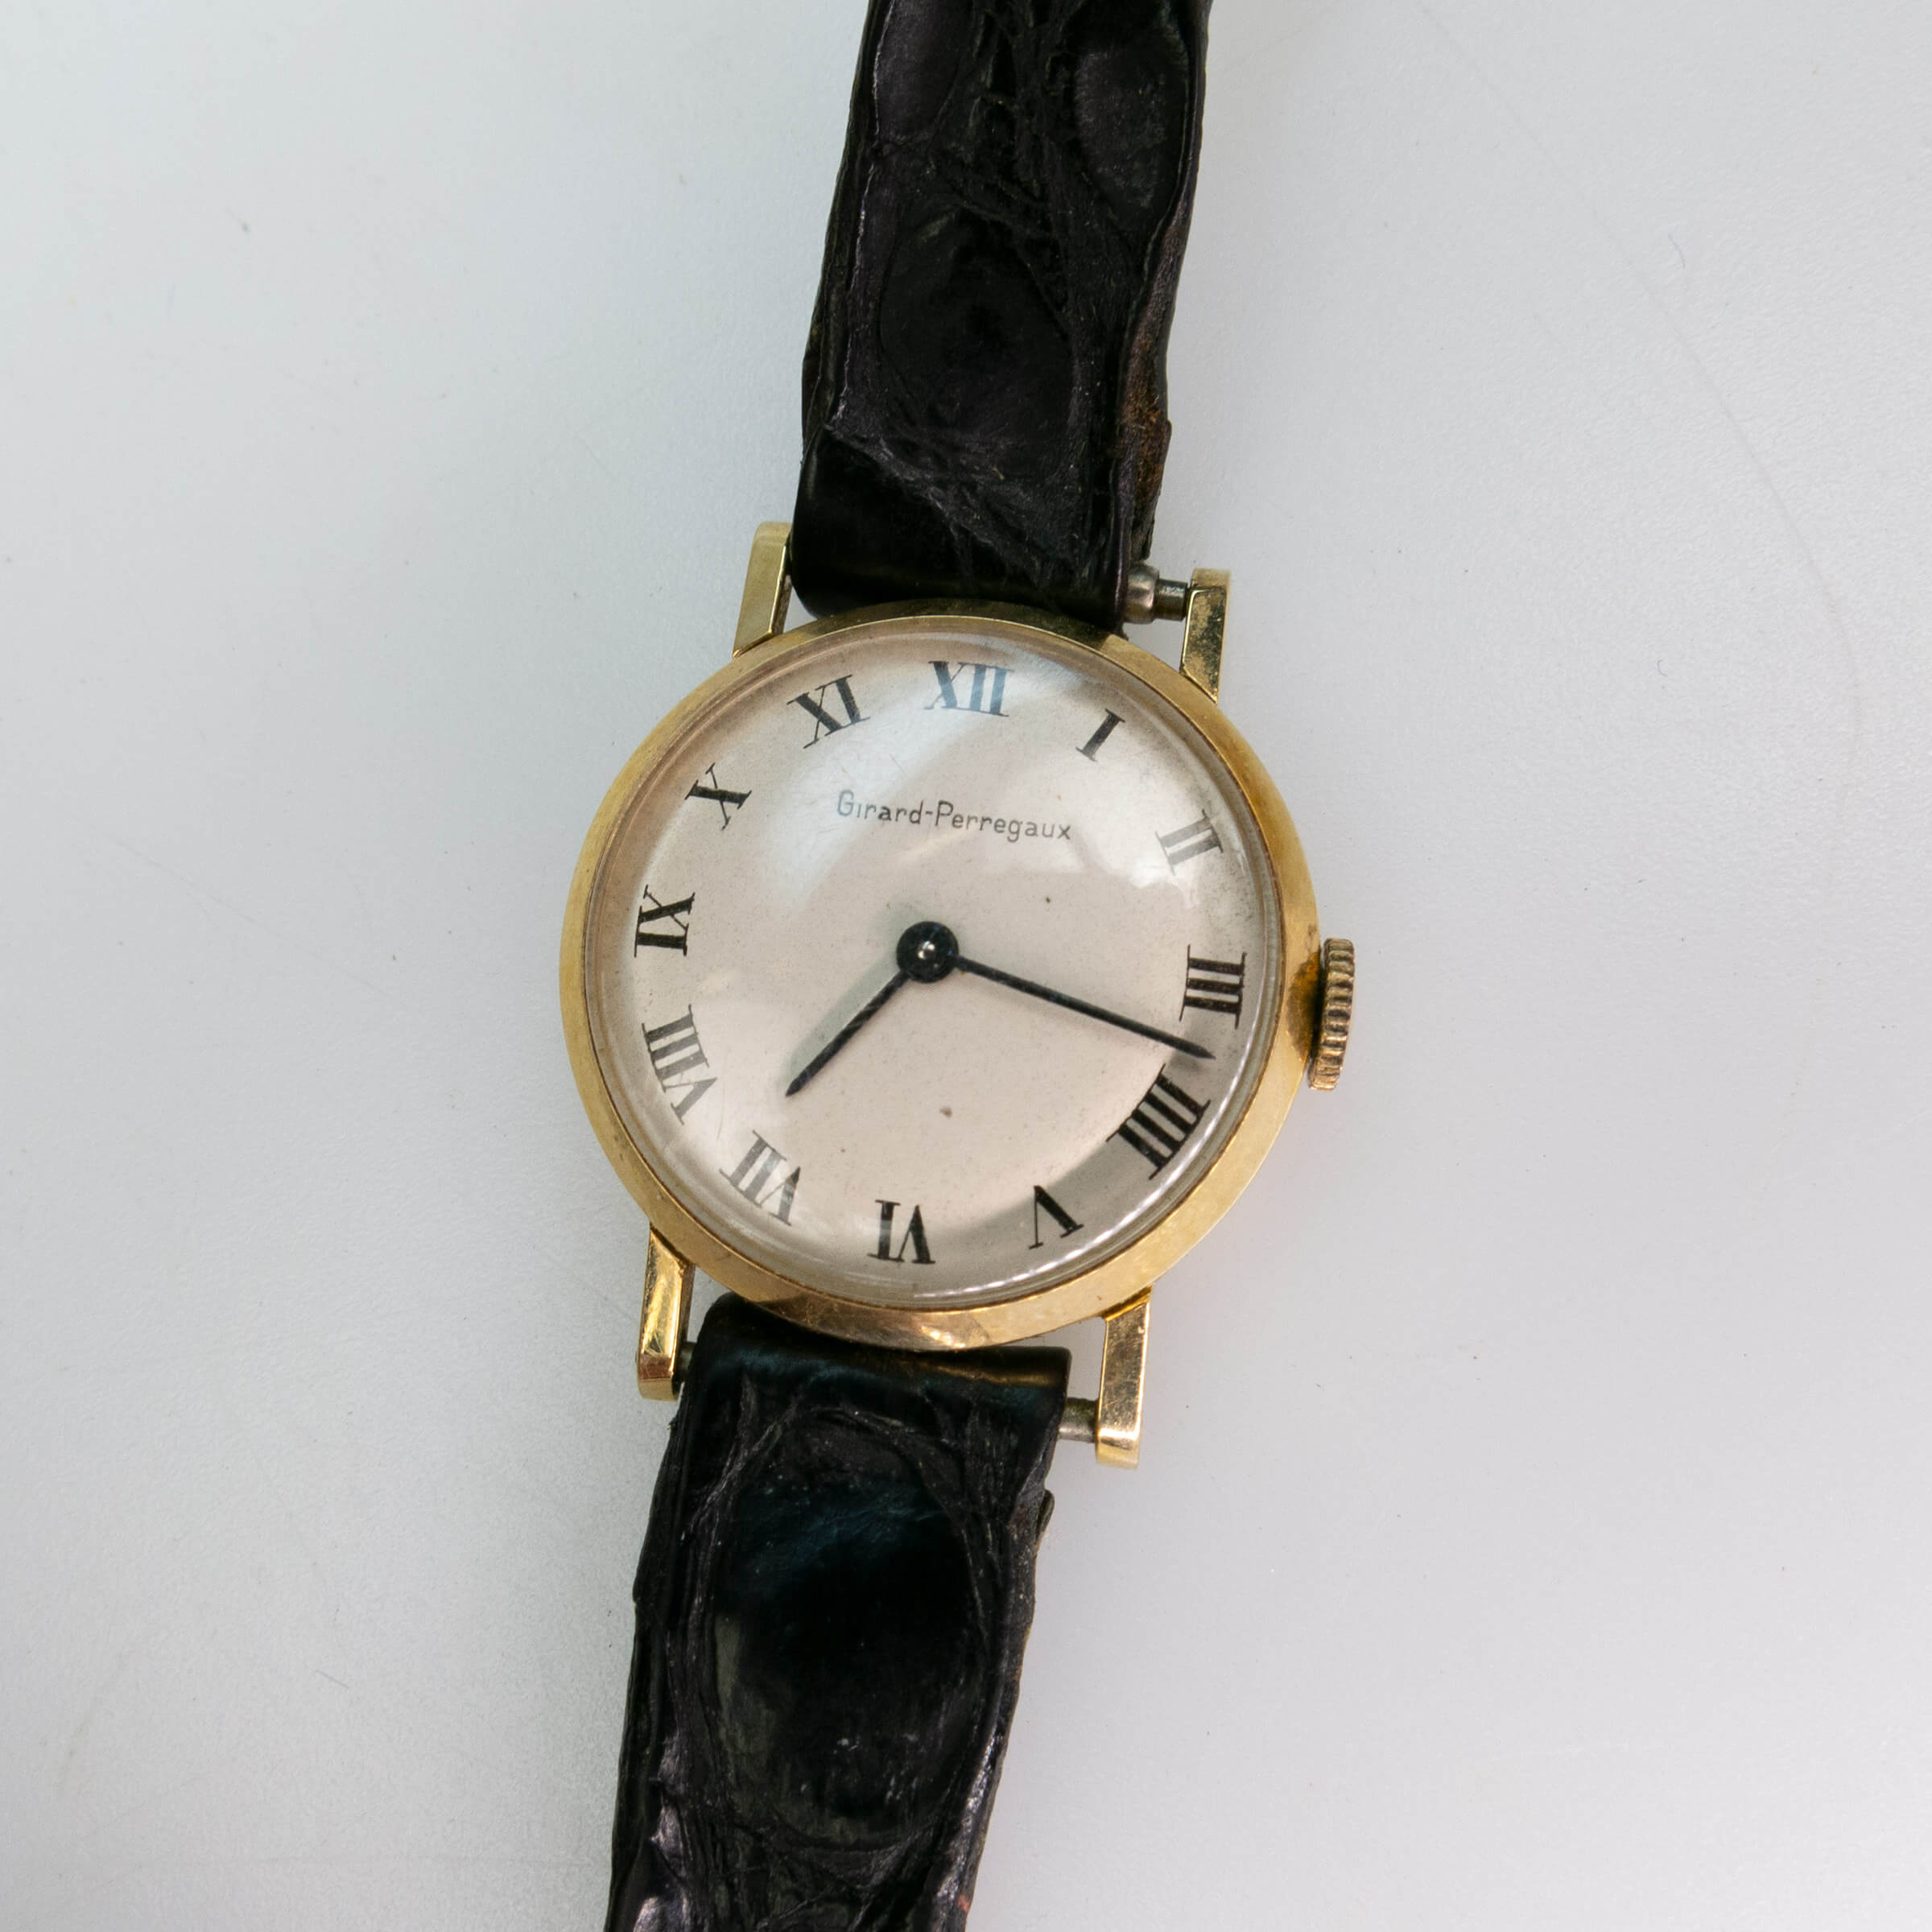 Lady’s Girard-Perregaux Wristwatch